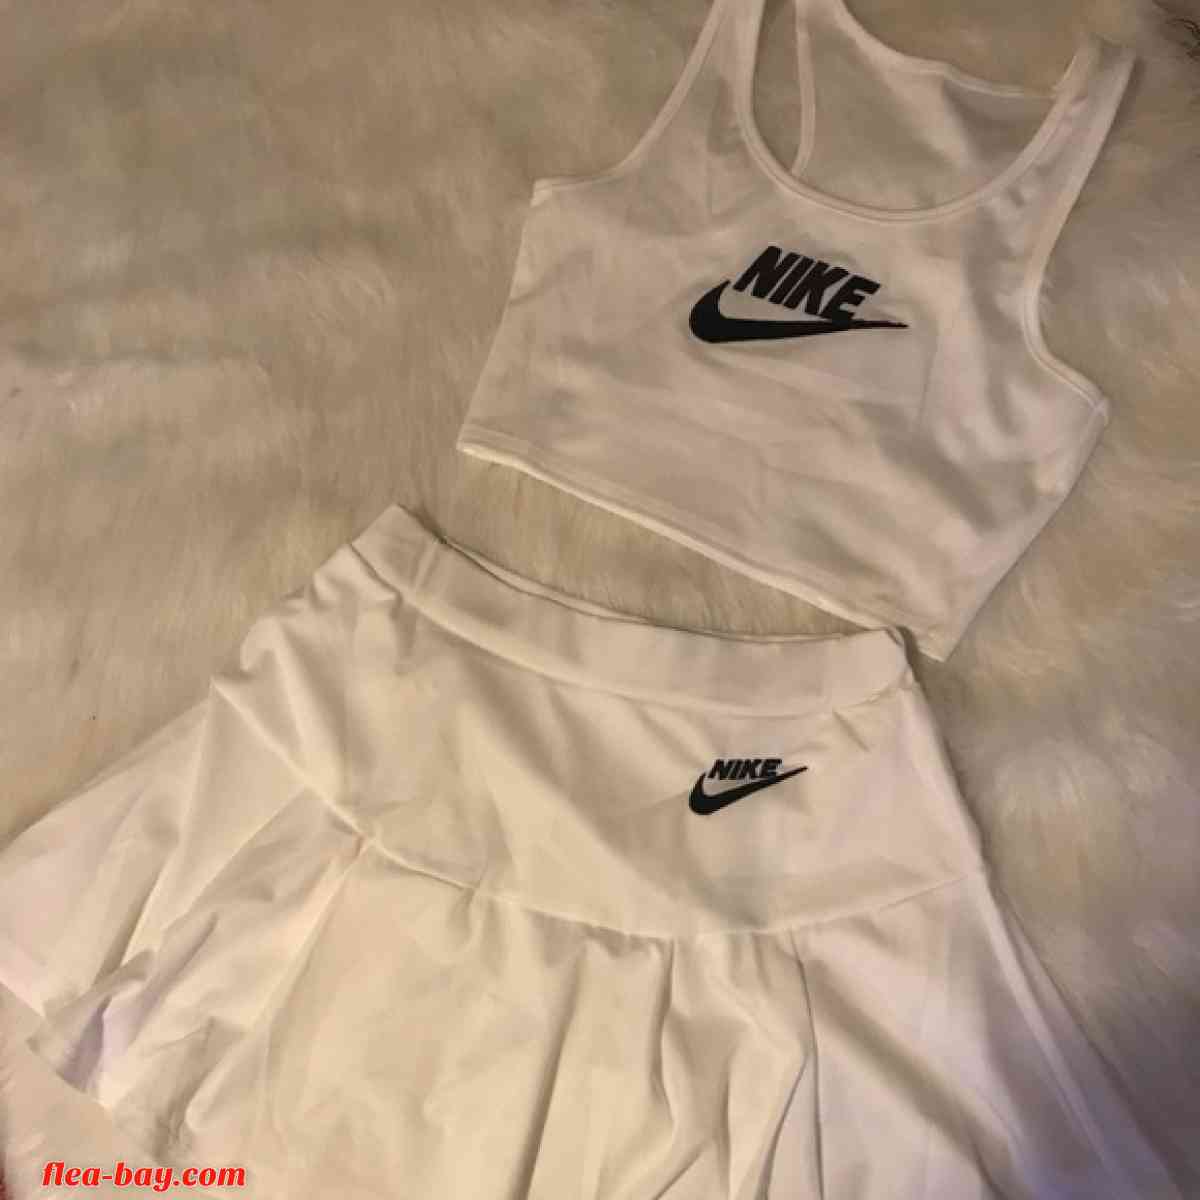 Nike outfits